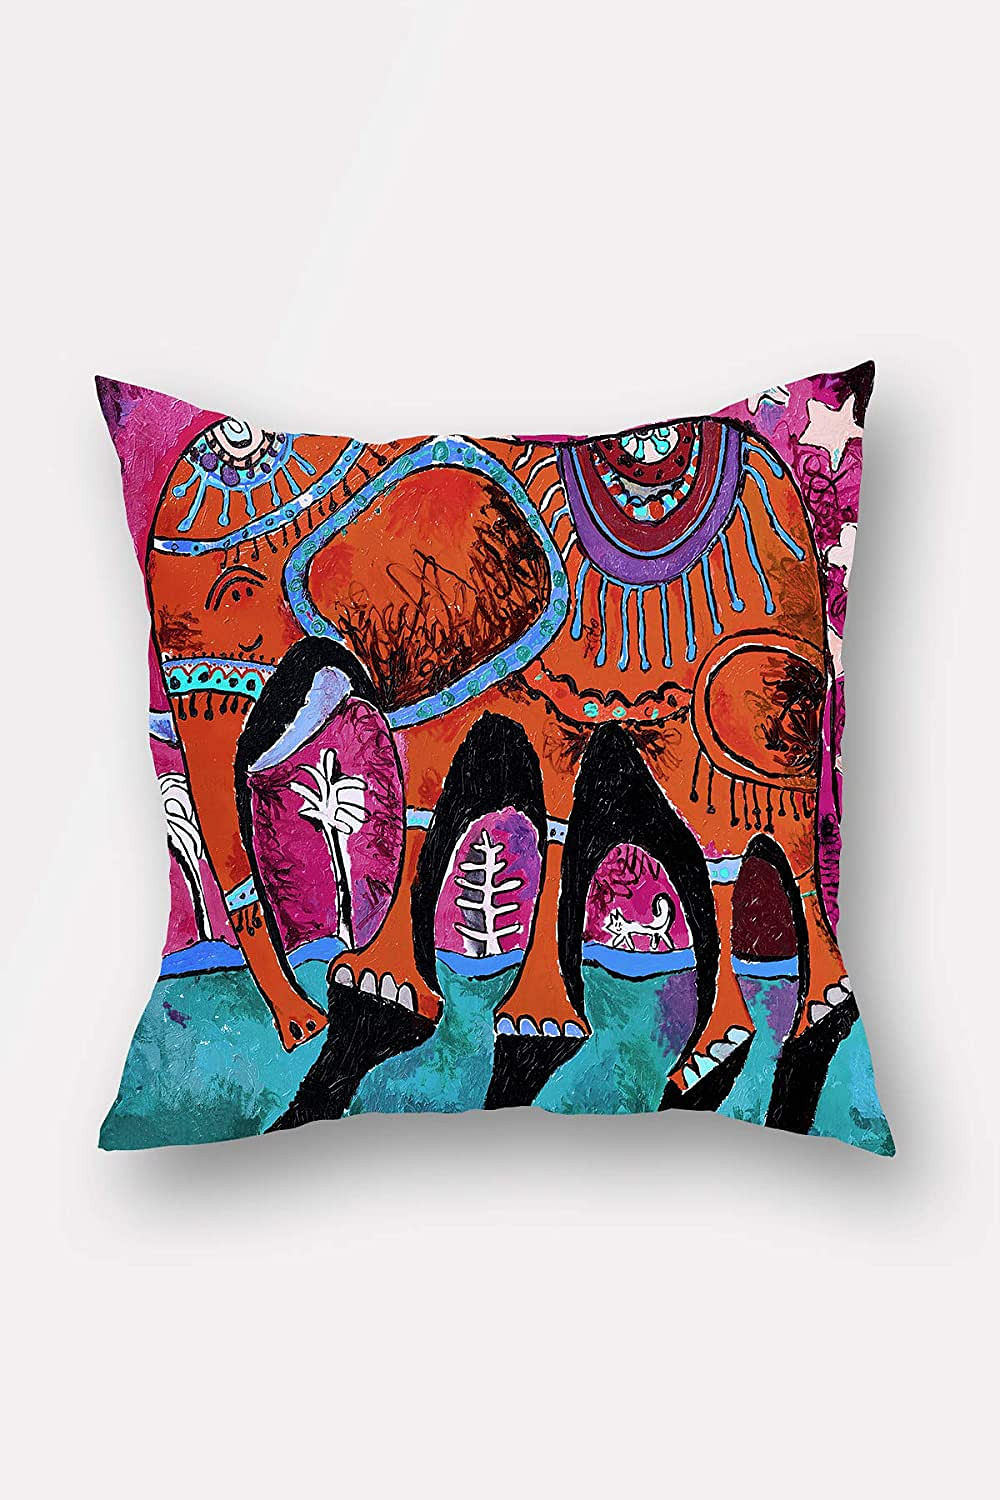 Bonamaison Decorative Throw Pillow Cover, Multi-Colour, 45 x 45 cm, BNMYST1280